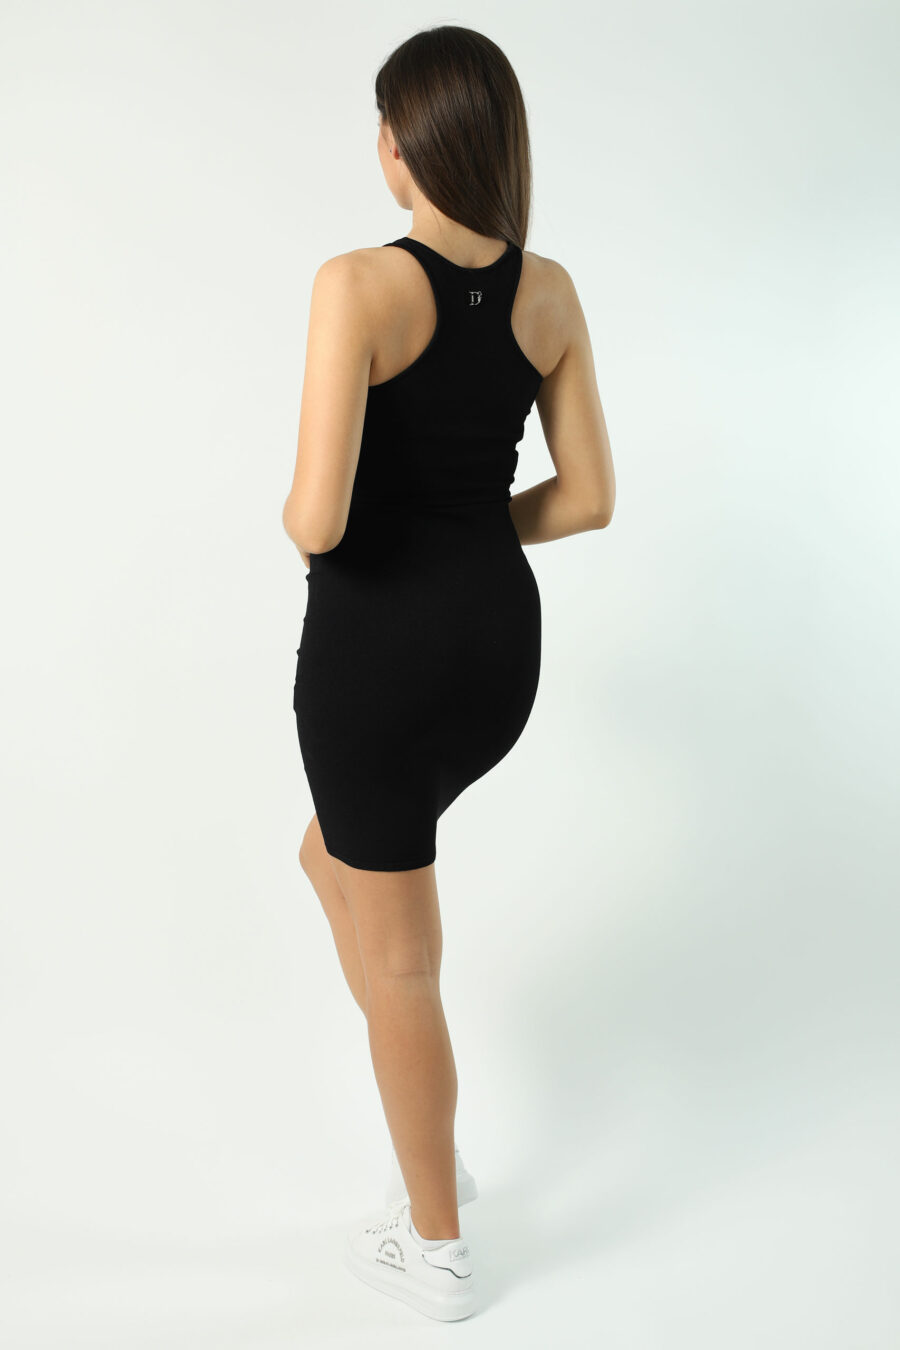 Black dress with slit - Photos 2541